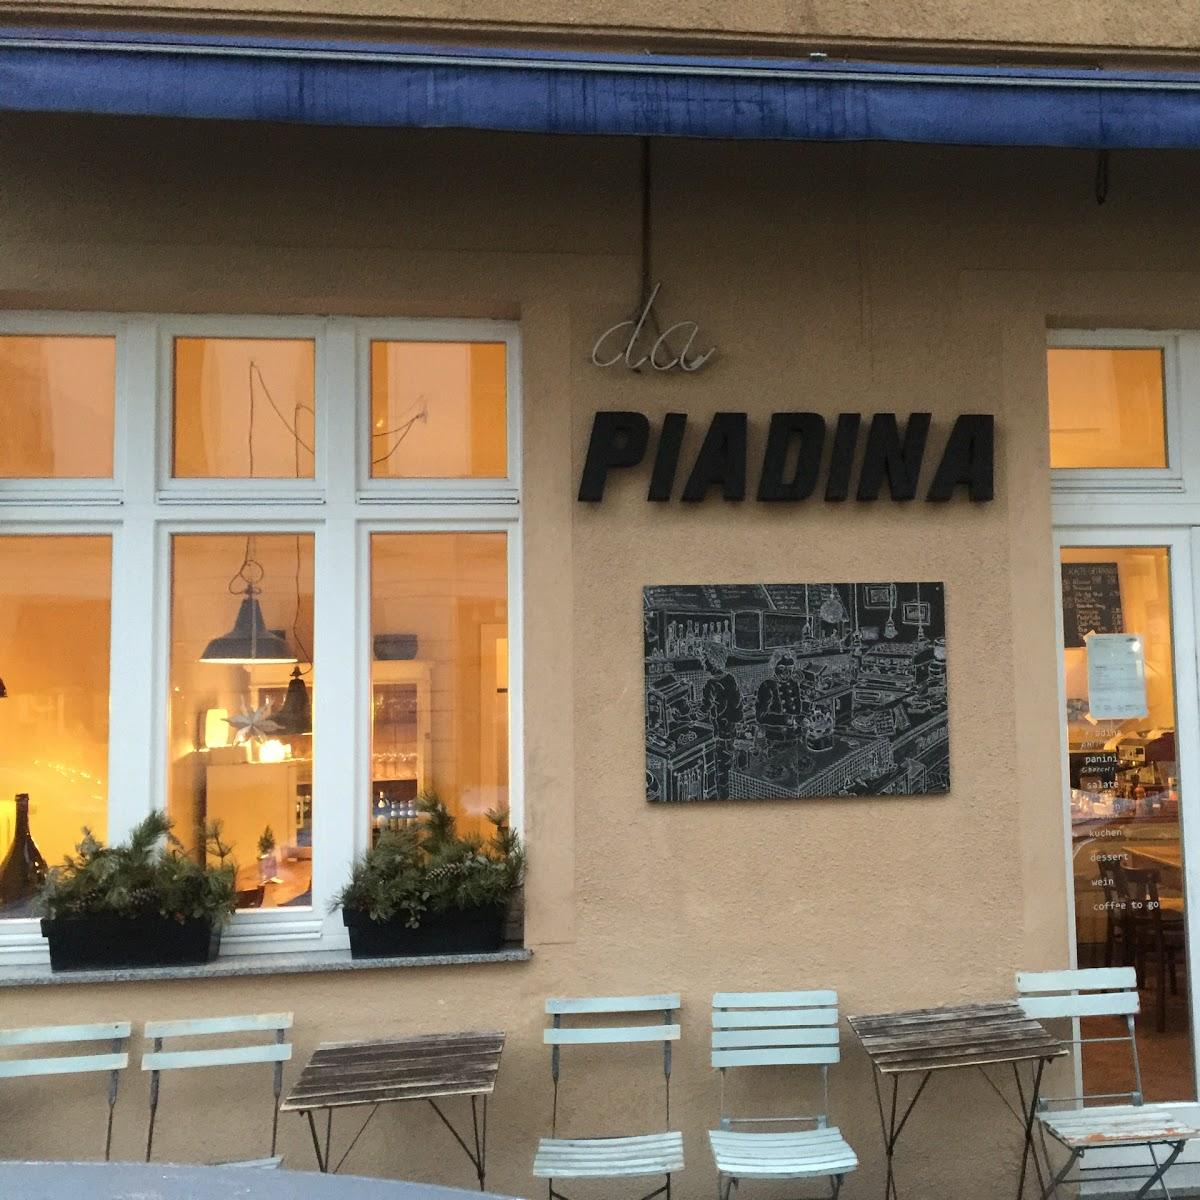 Restaurant "Da Piada" in Berlin